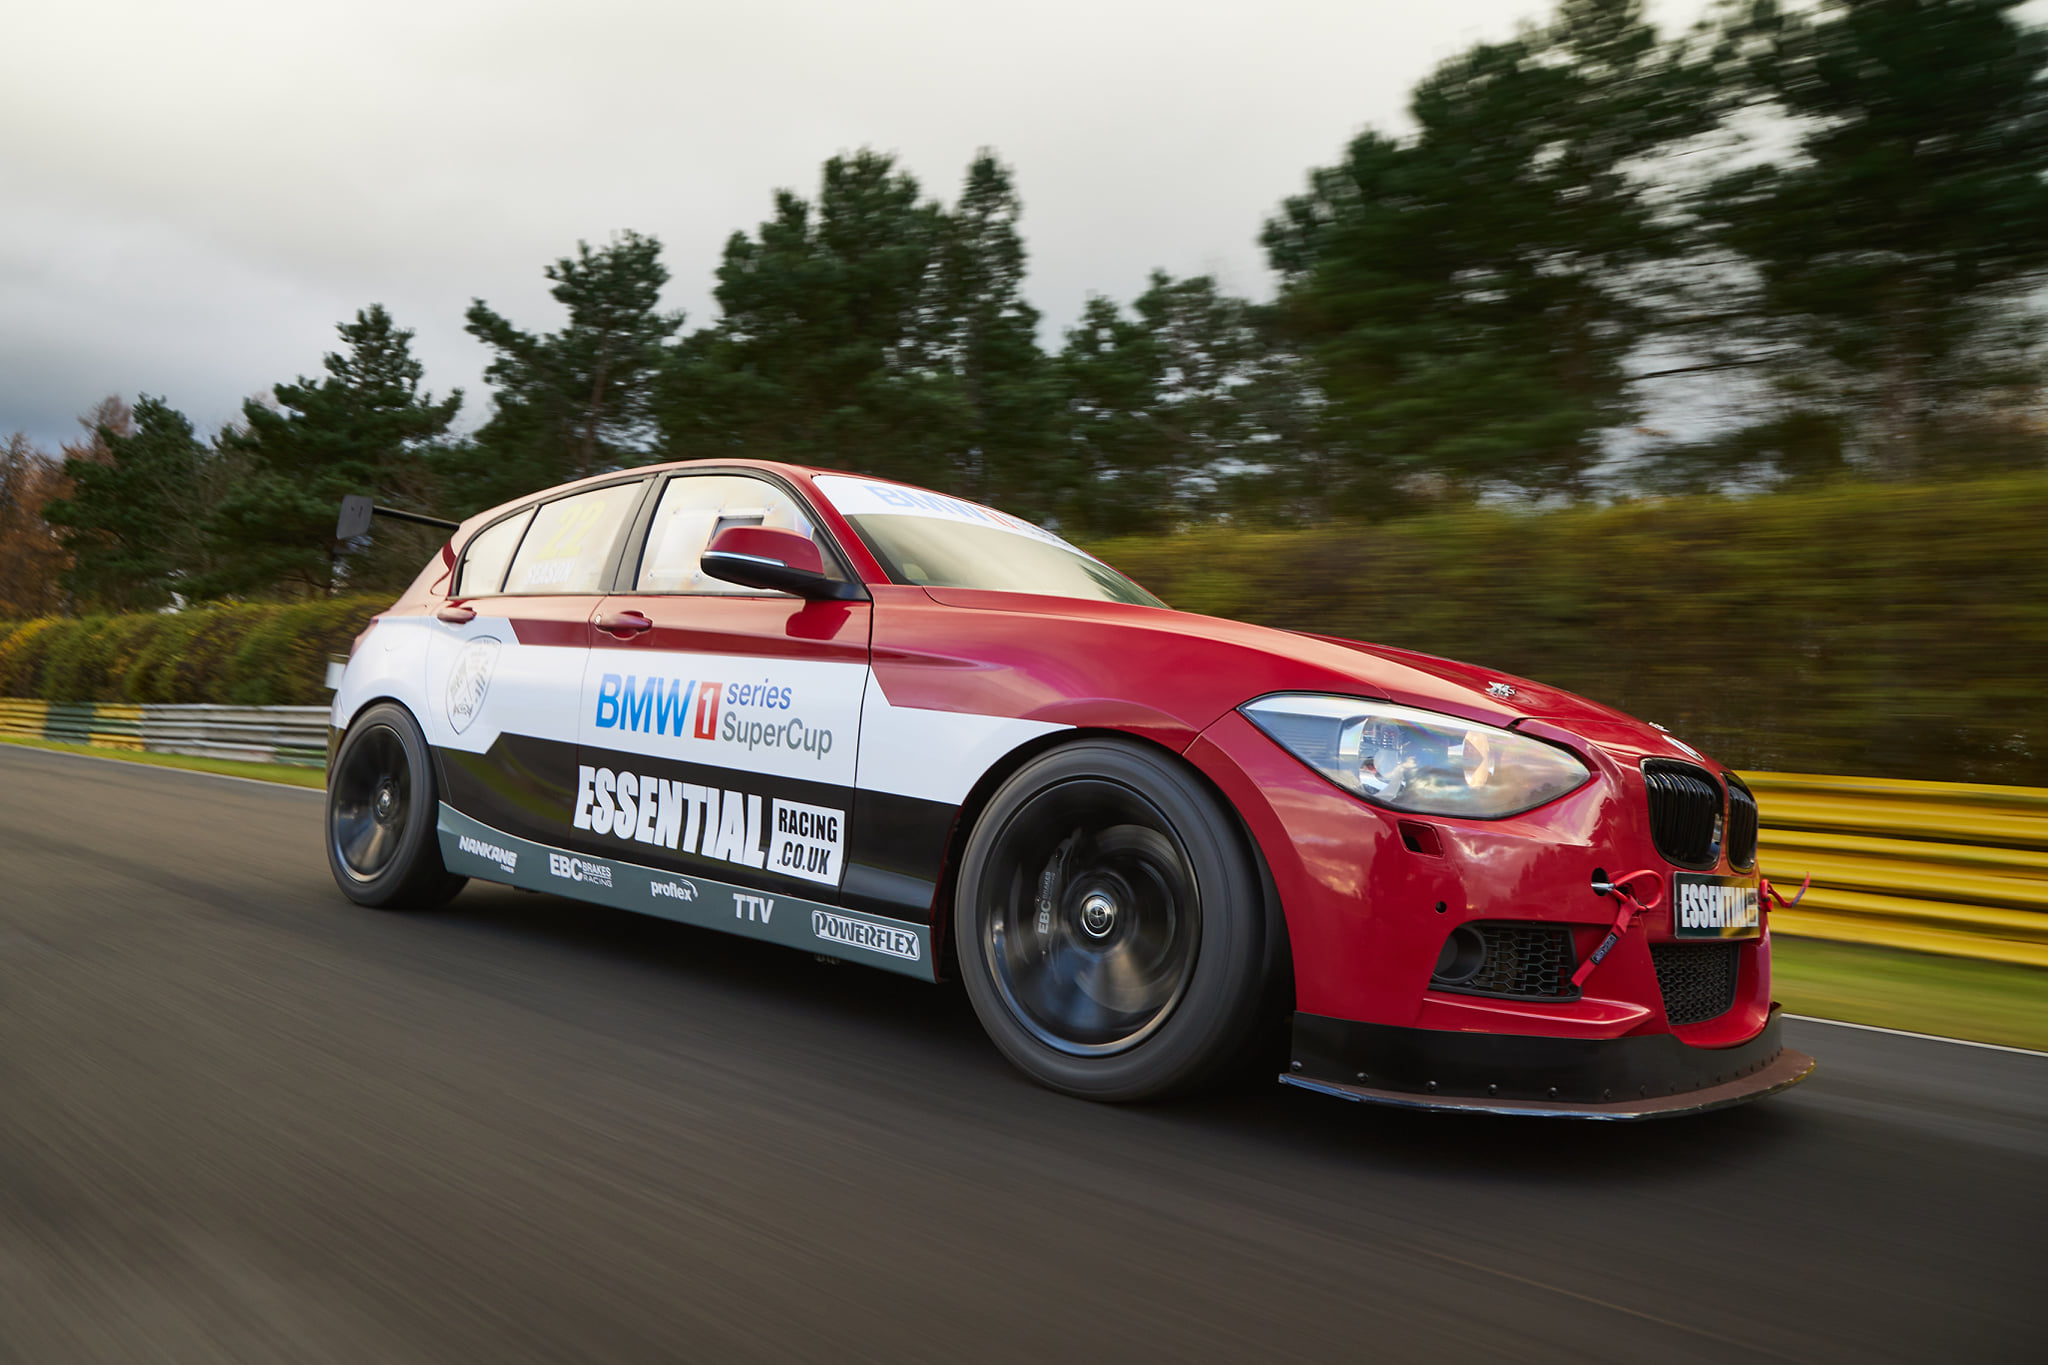 EBC Brakes Racing Provides Regulation Braking System for BRSCC BMW 1 Series SuperCup